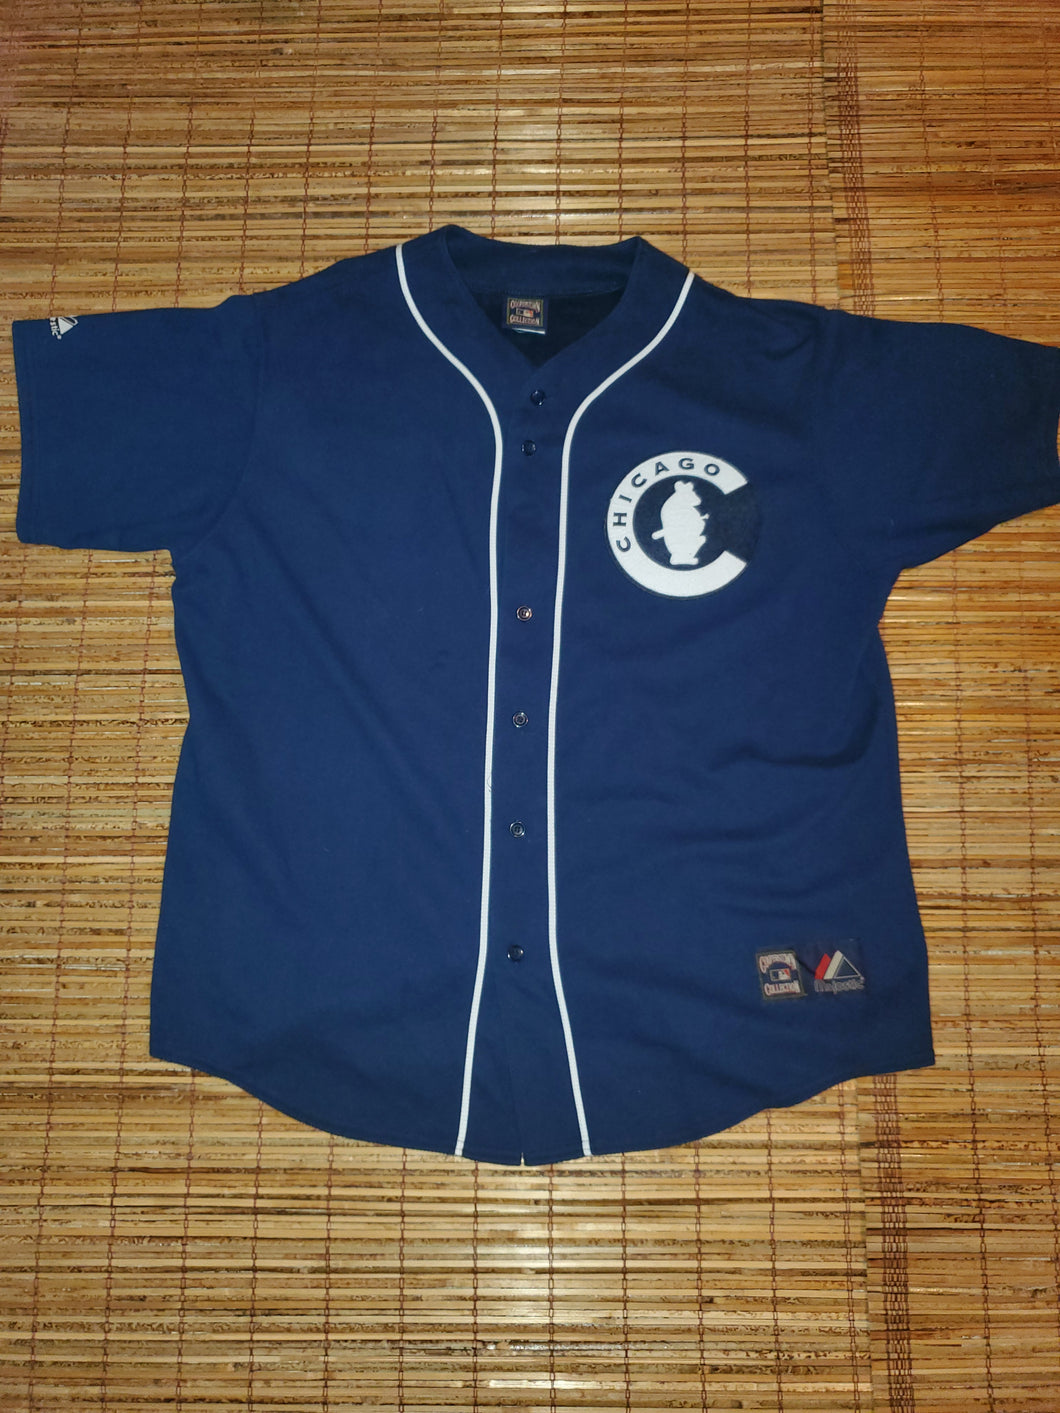 cubs 1908 jersey